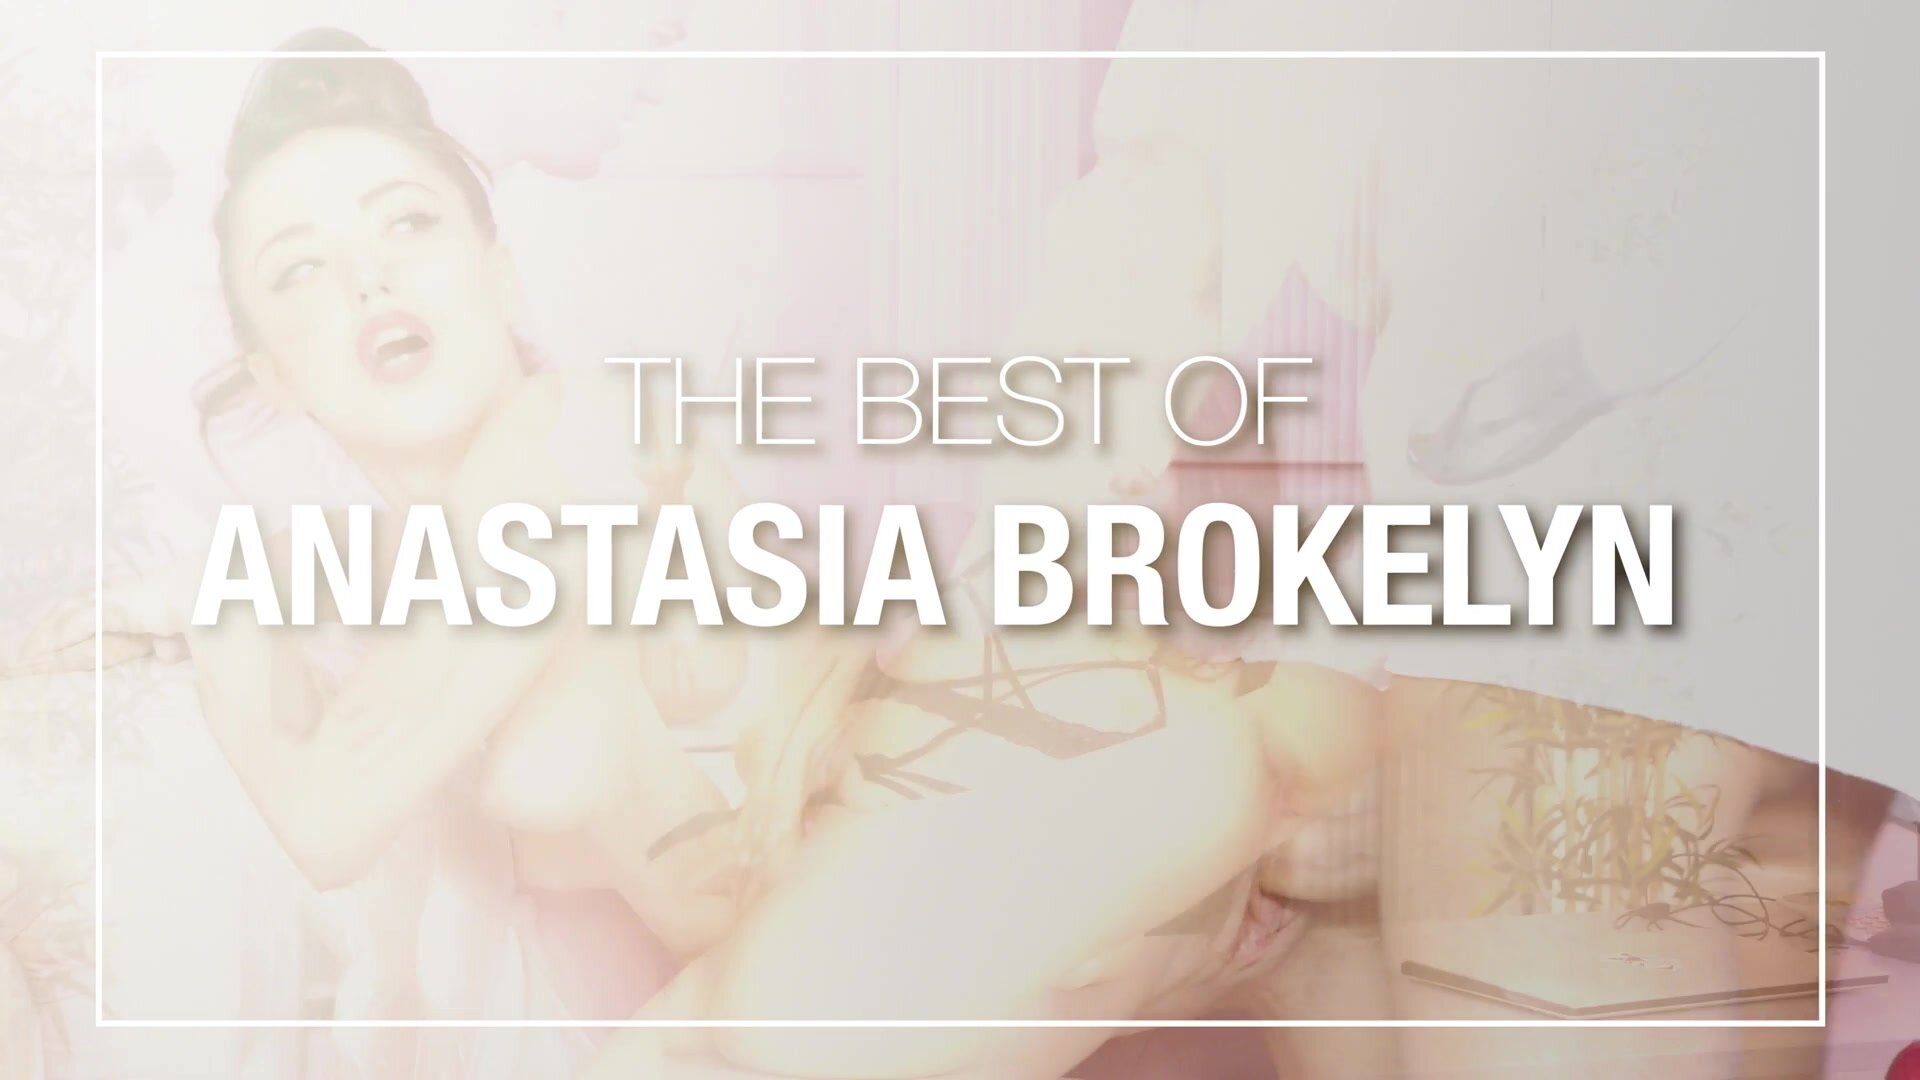 The Best of Anastasia Brokelyn